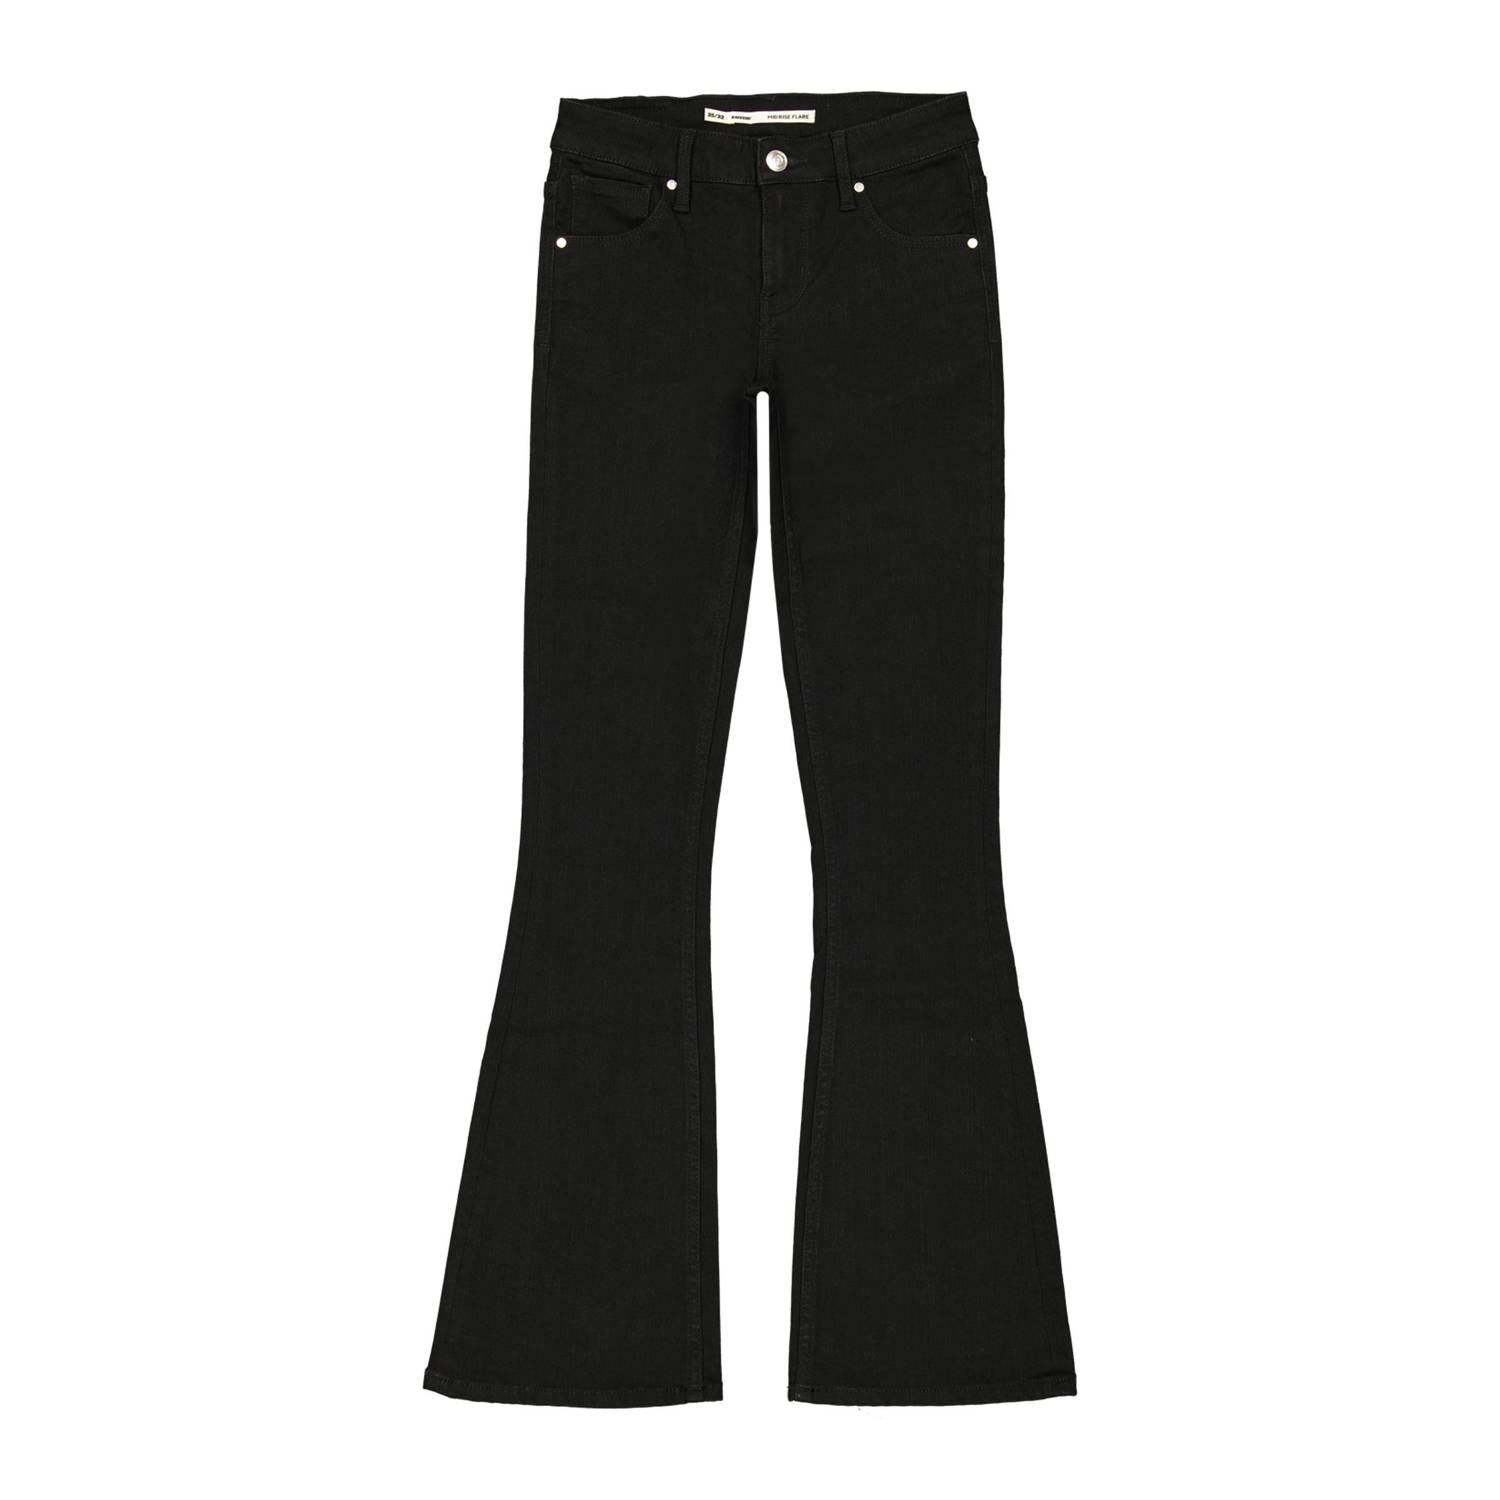 Raizzed high waist flared jeans black denim